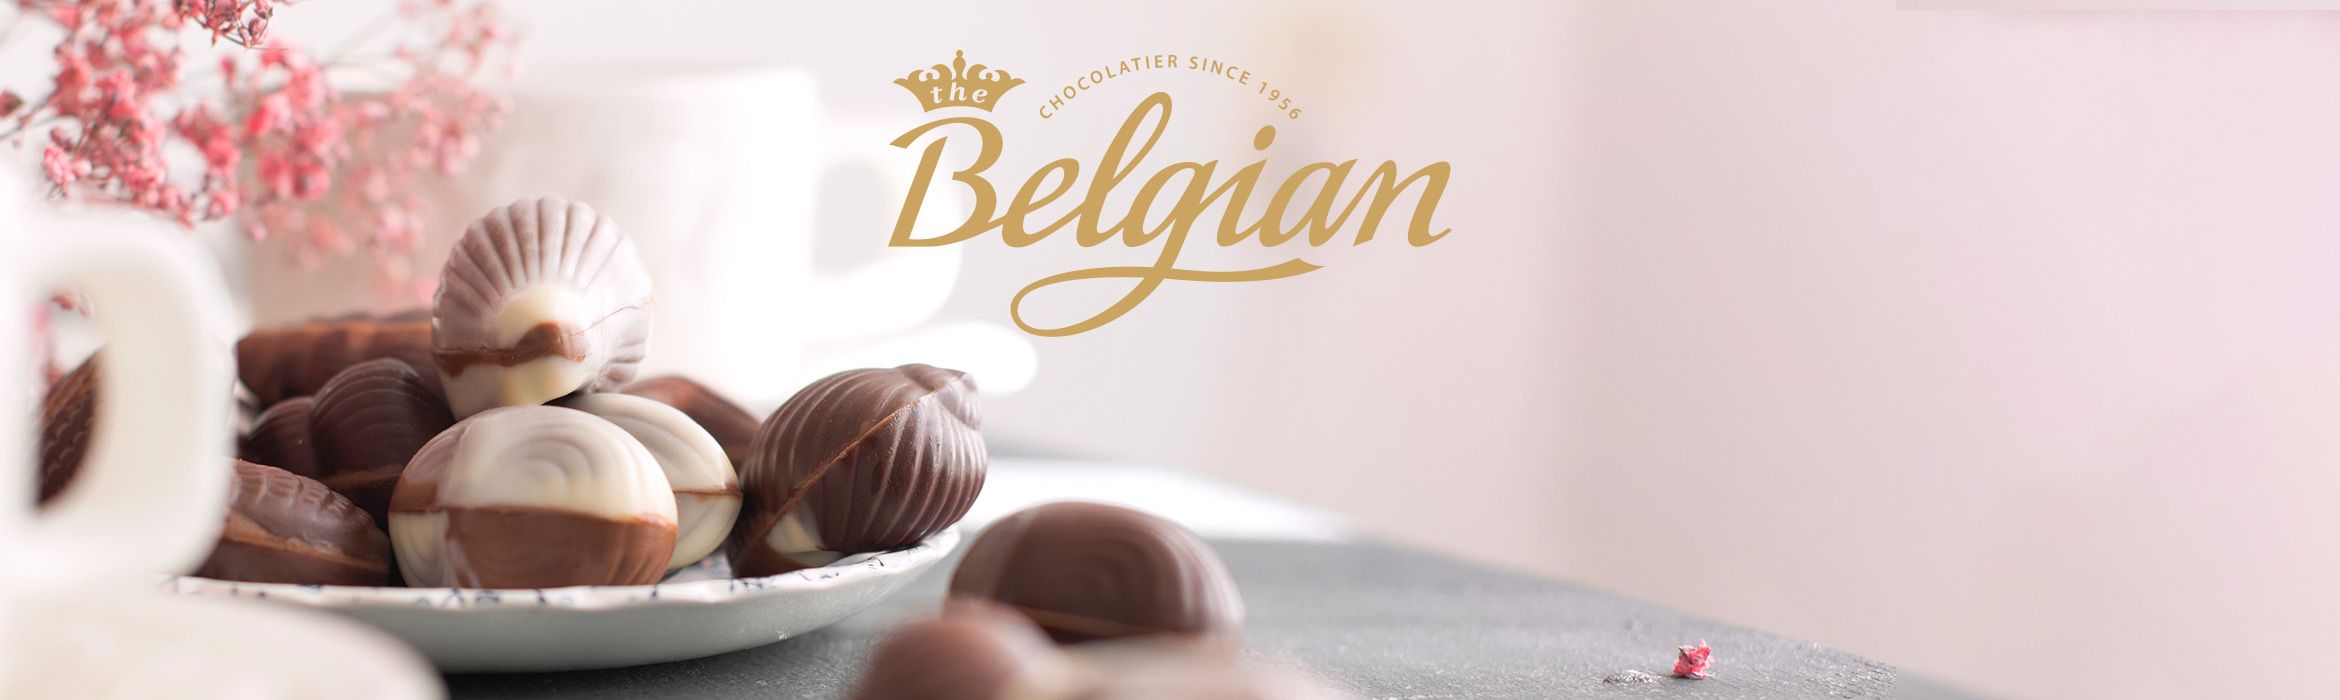 THE BELGIAN Schokolade